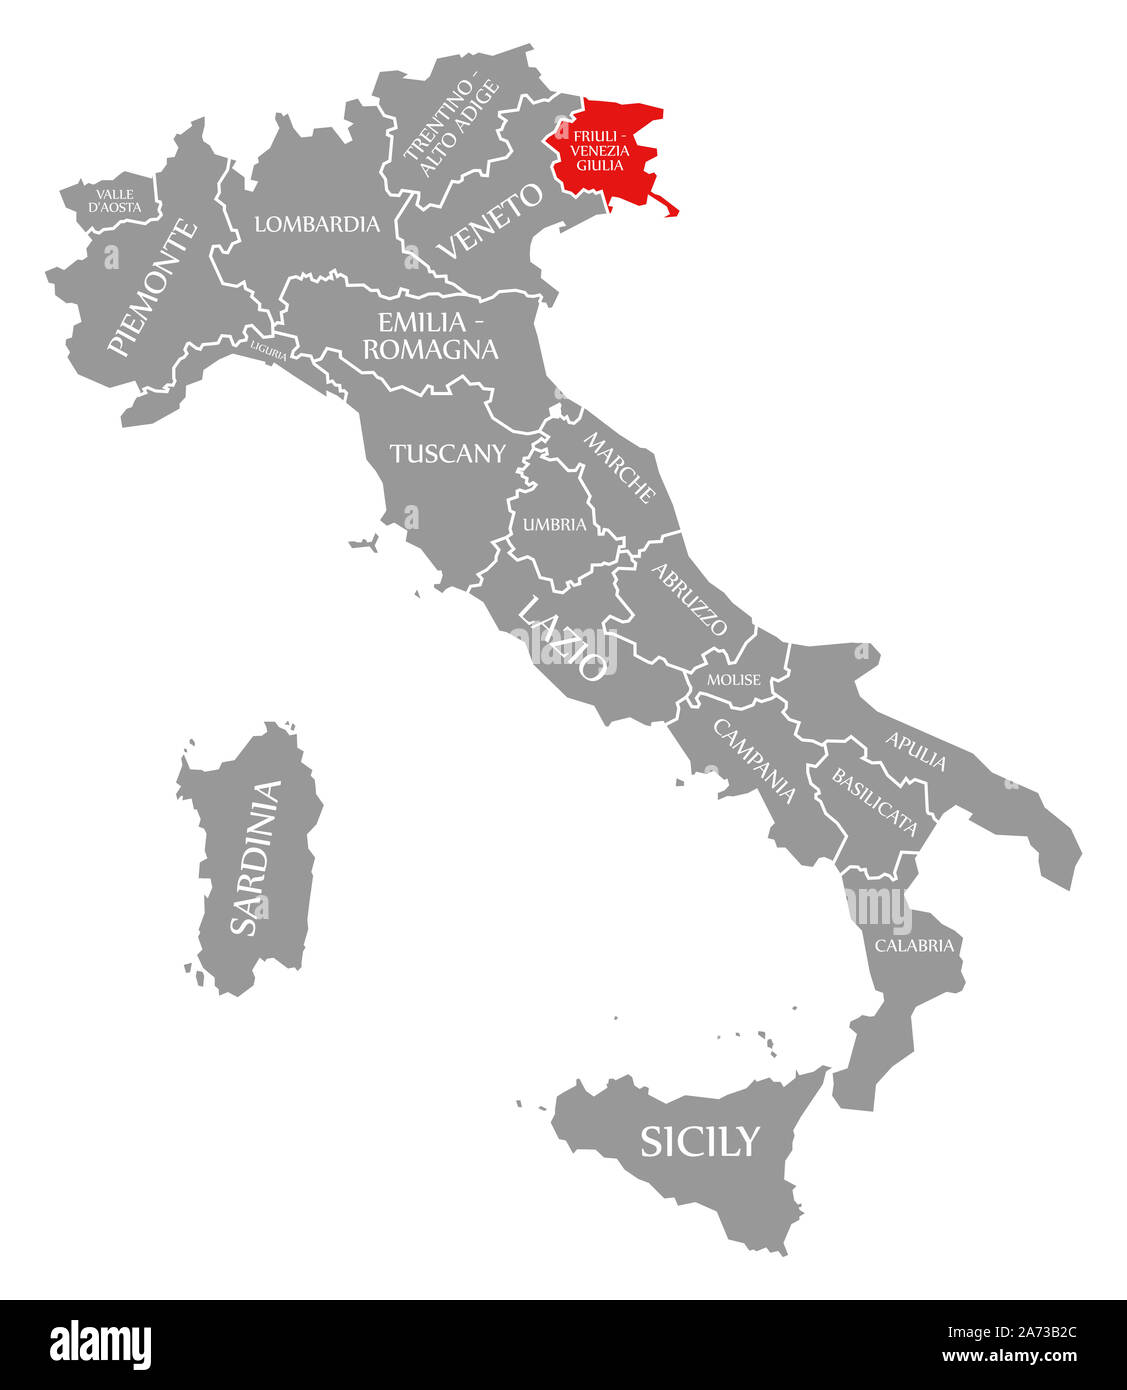 Friul-venecia Julia resaltada en rojo en el mapa de Italia Foto de stock